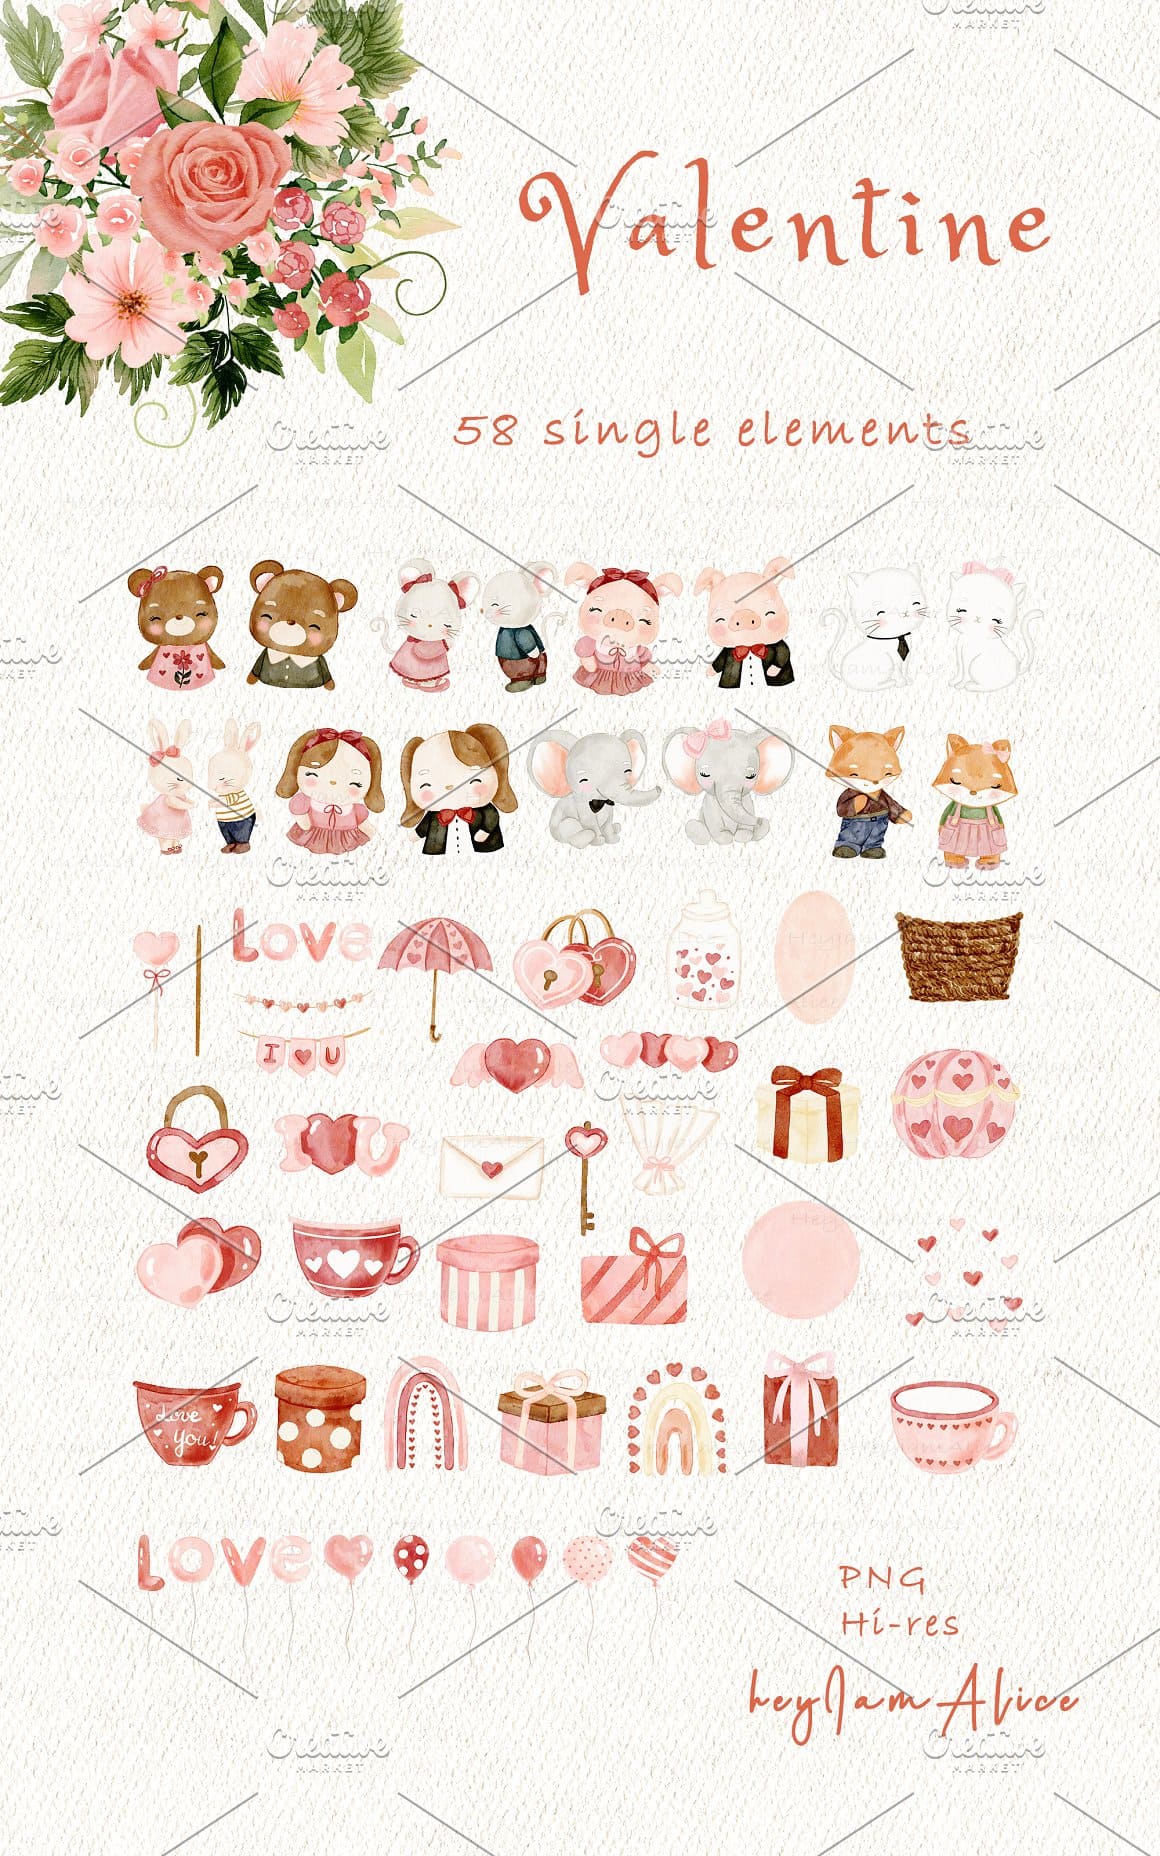 58 single elements of Valentine.